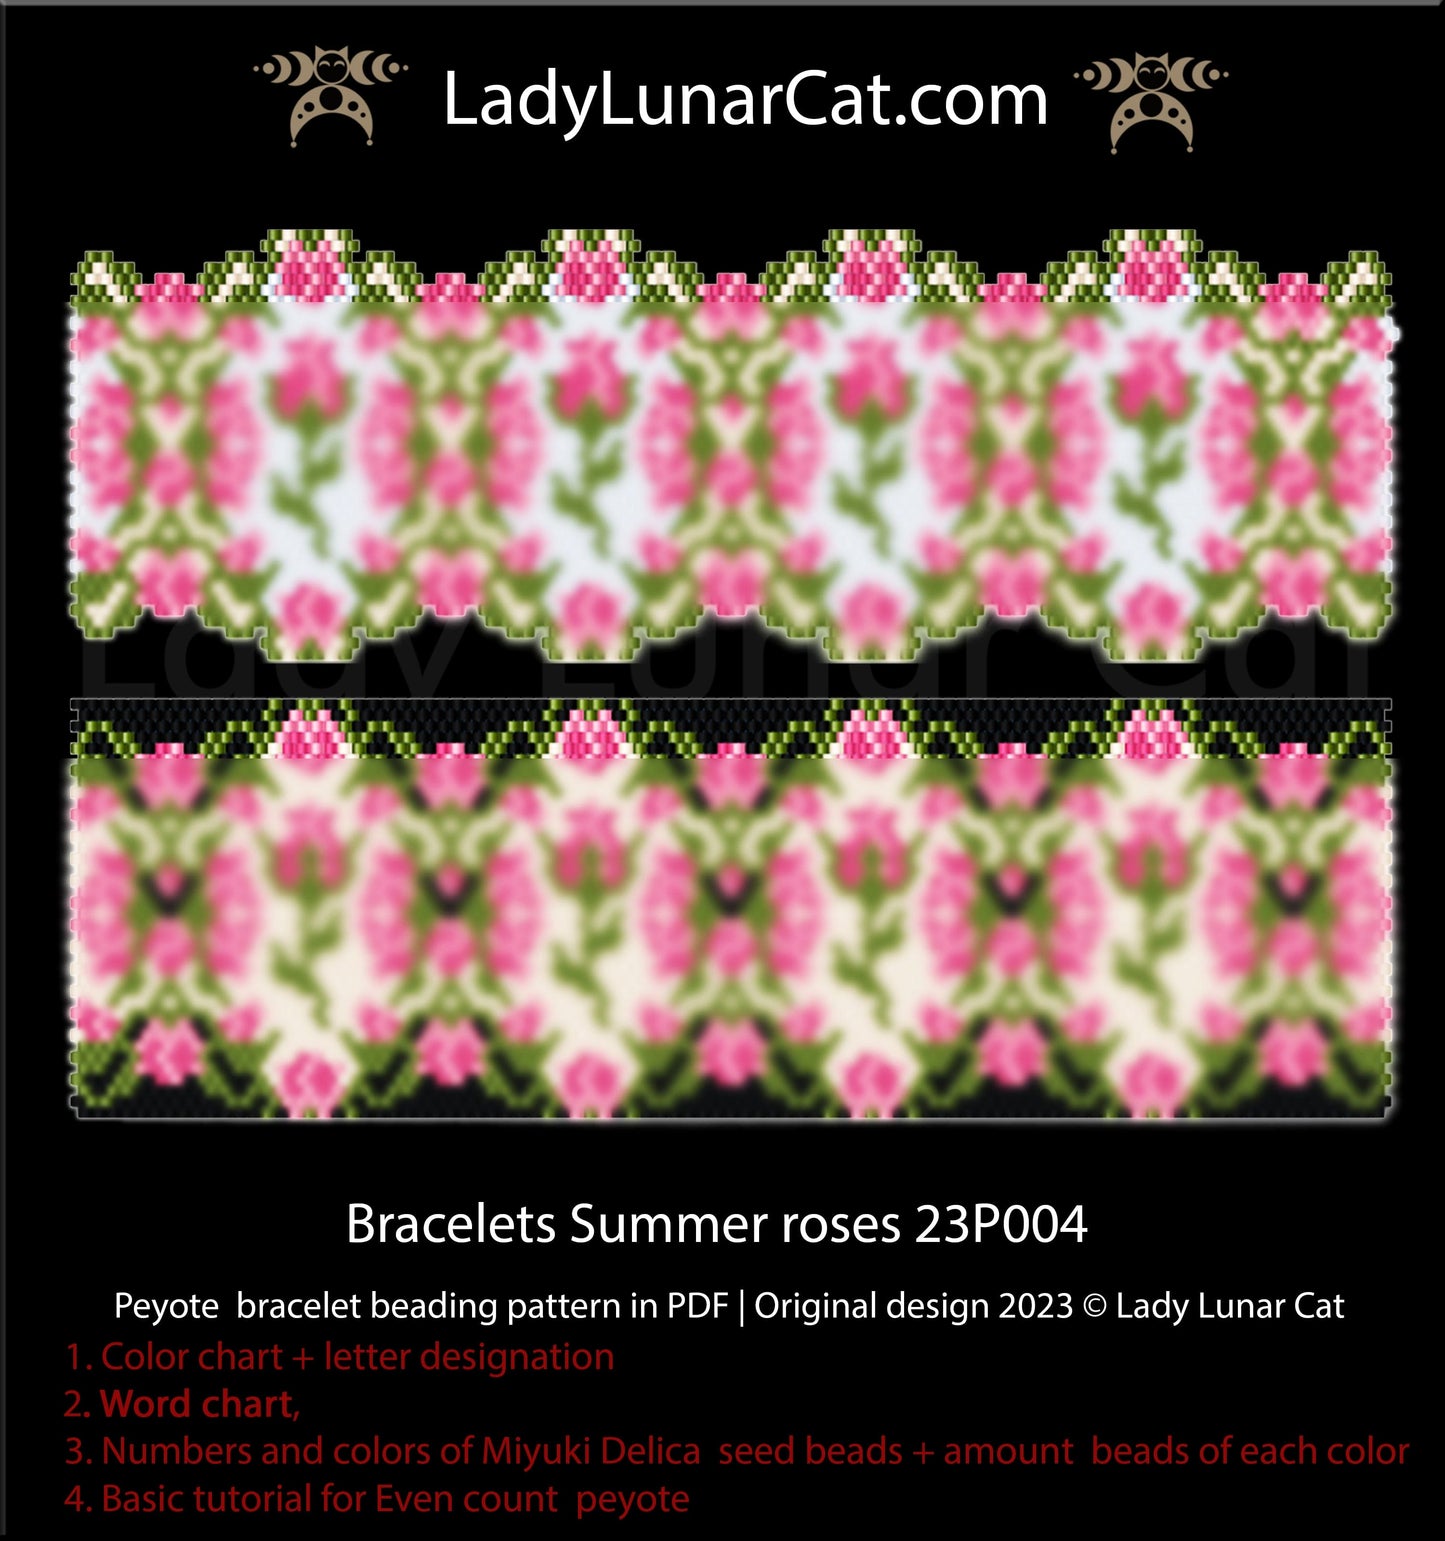 Copy of Even count peyote bracelet pattern Spring roses 23P002 LadyLunarCat